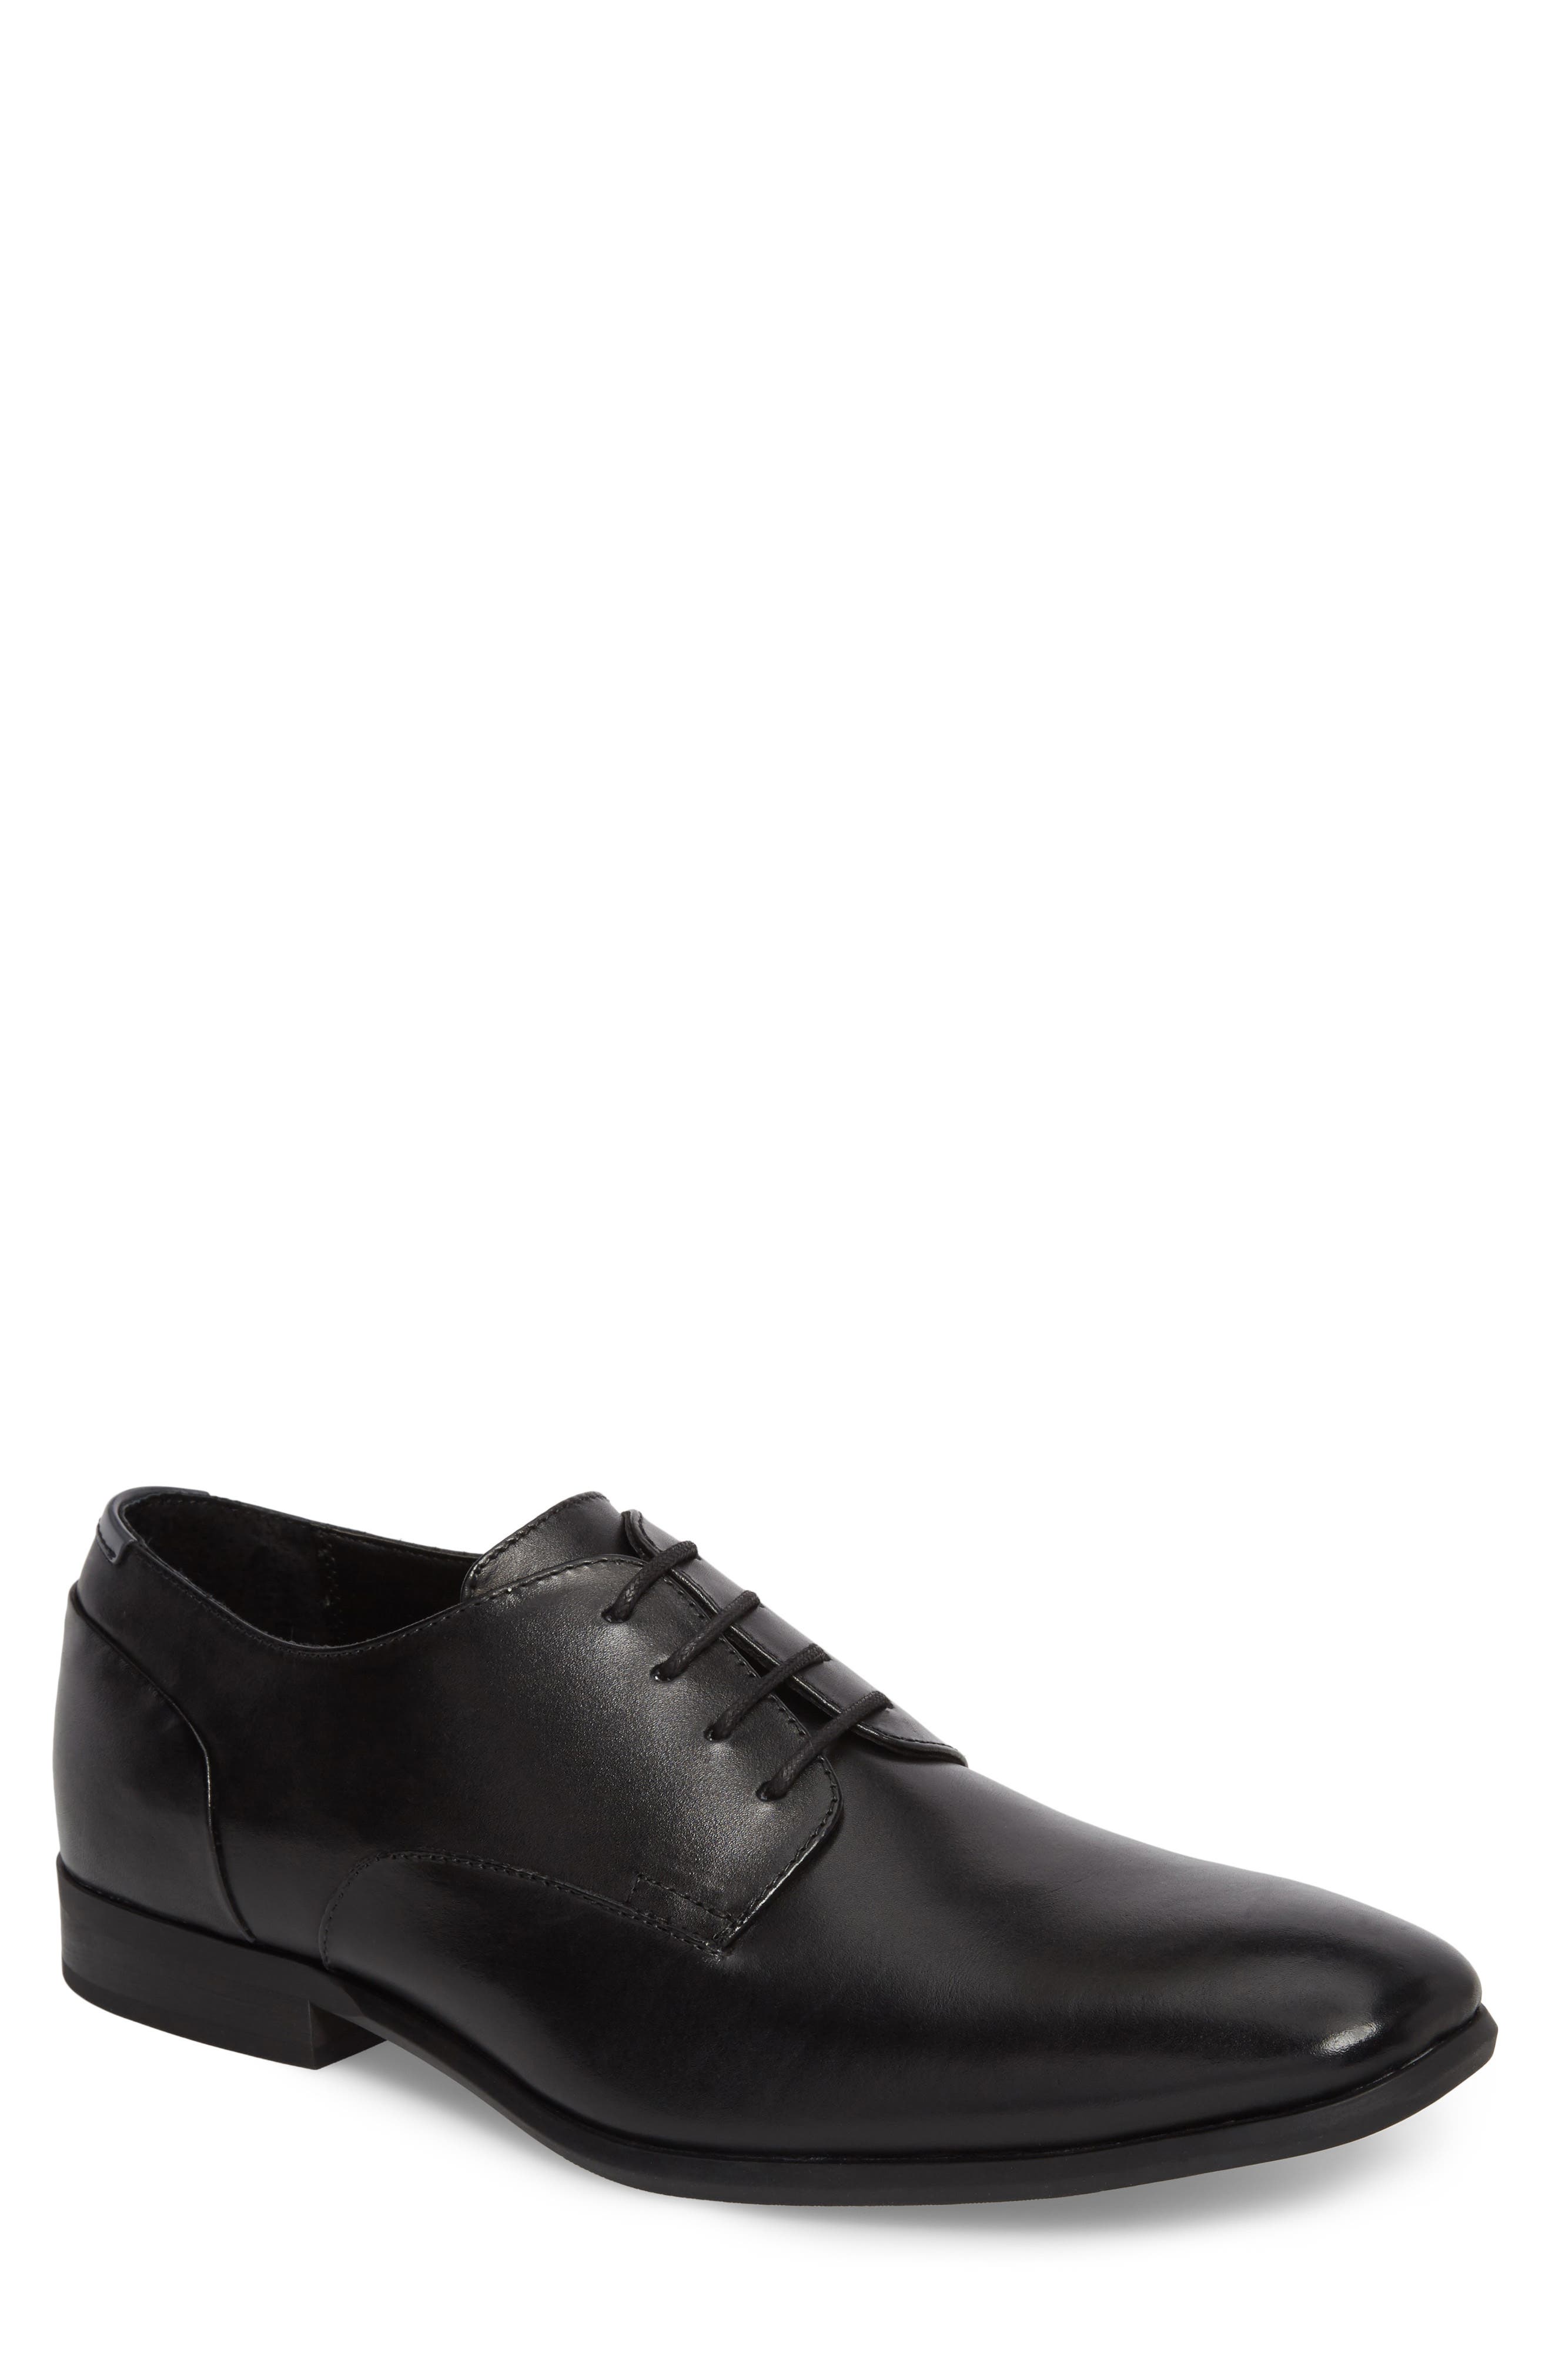 UPC 191712059681 product image for Men's Calvin Klein Lucca Plain Toe Derby, Size 8 M - Black | upcitemdb.com